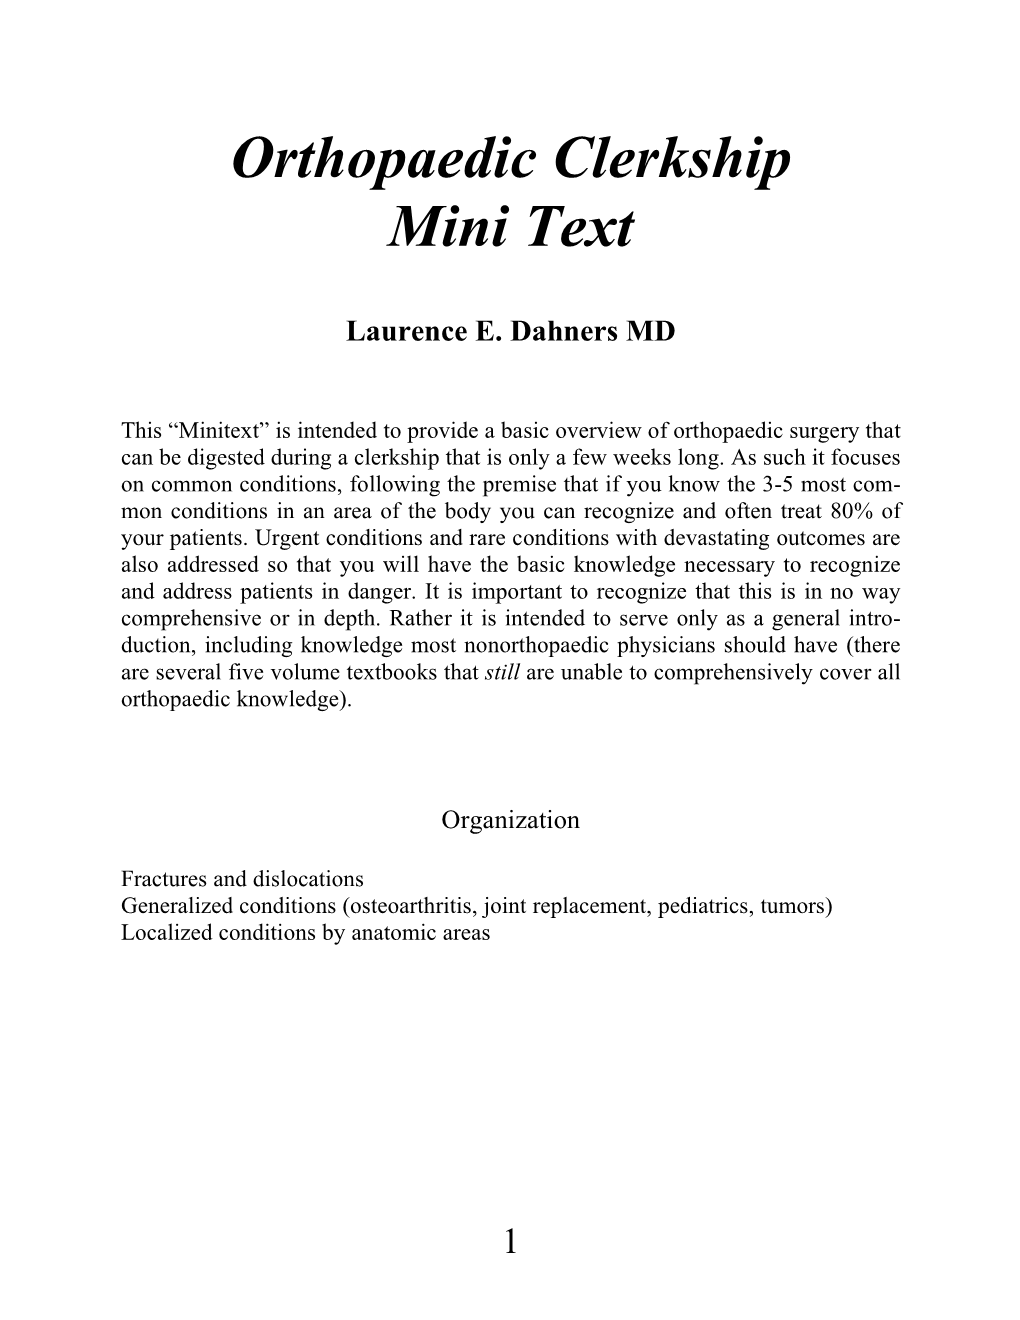 Orthopaedic Clerkship Mini Text